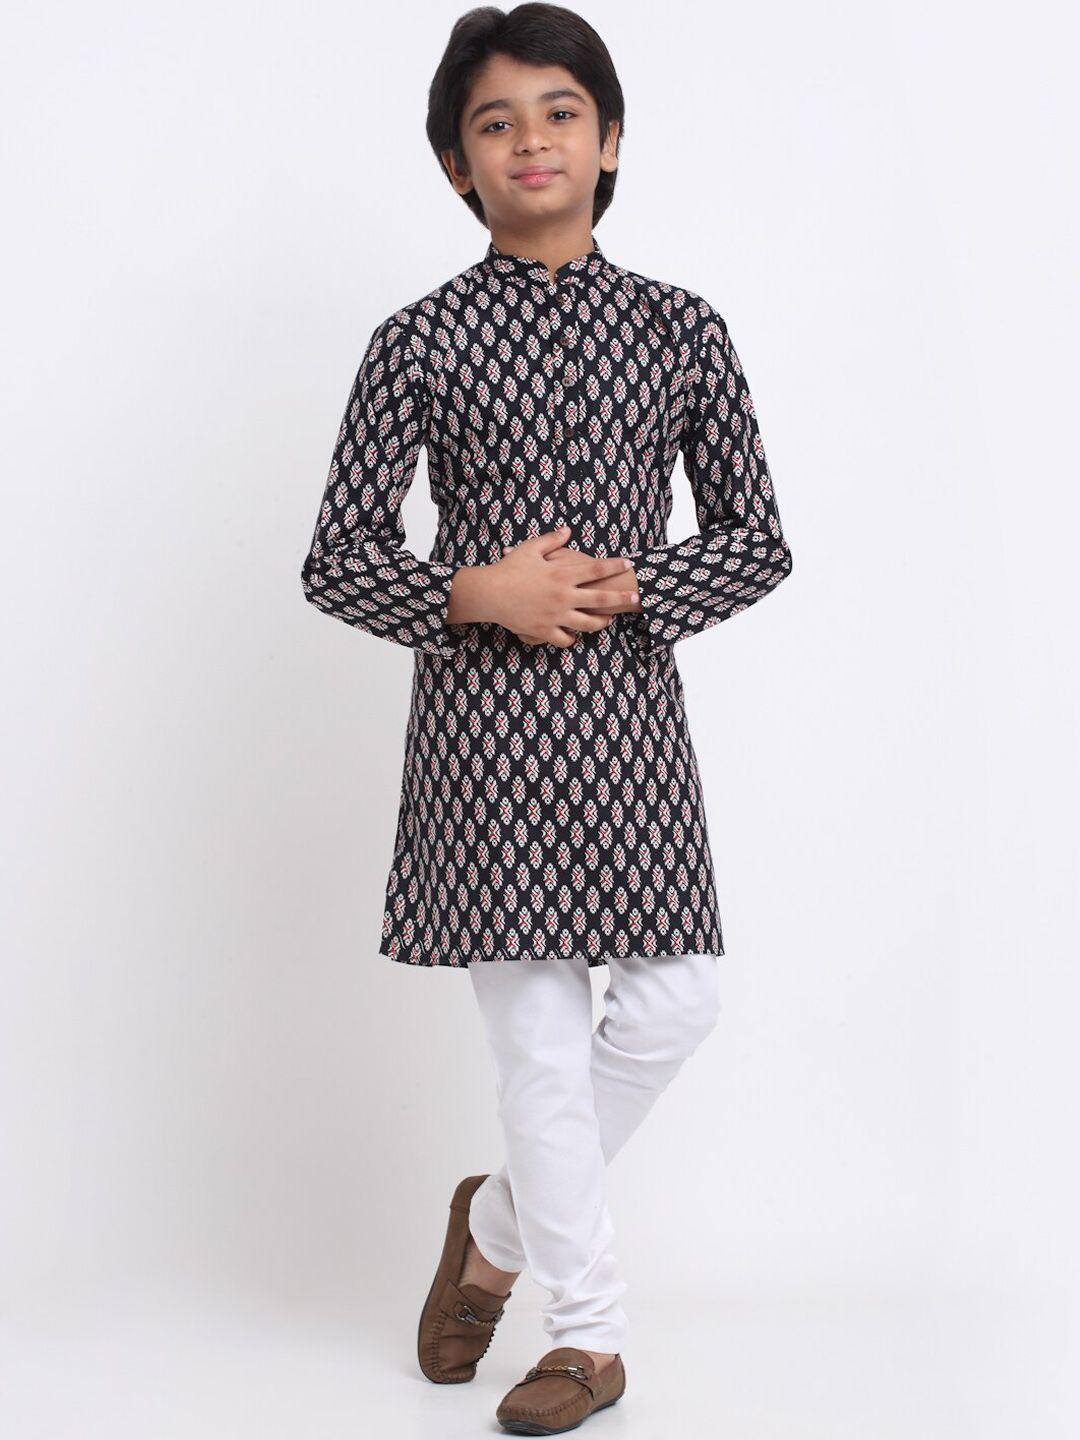 kraft-india-boys-ethnic-motifs-printed-cotton-kurta